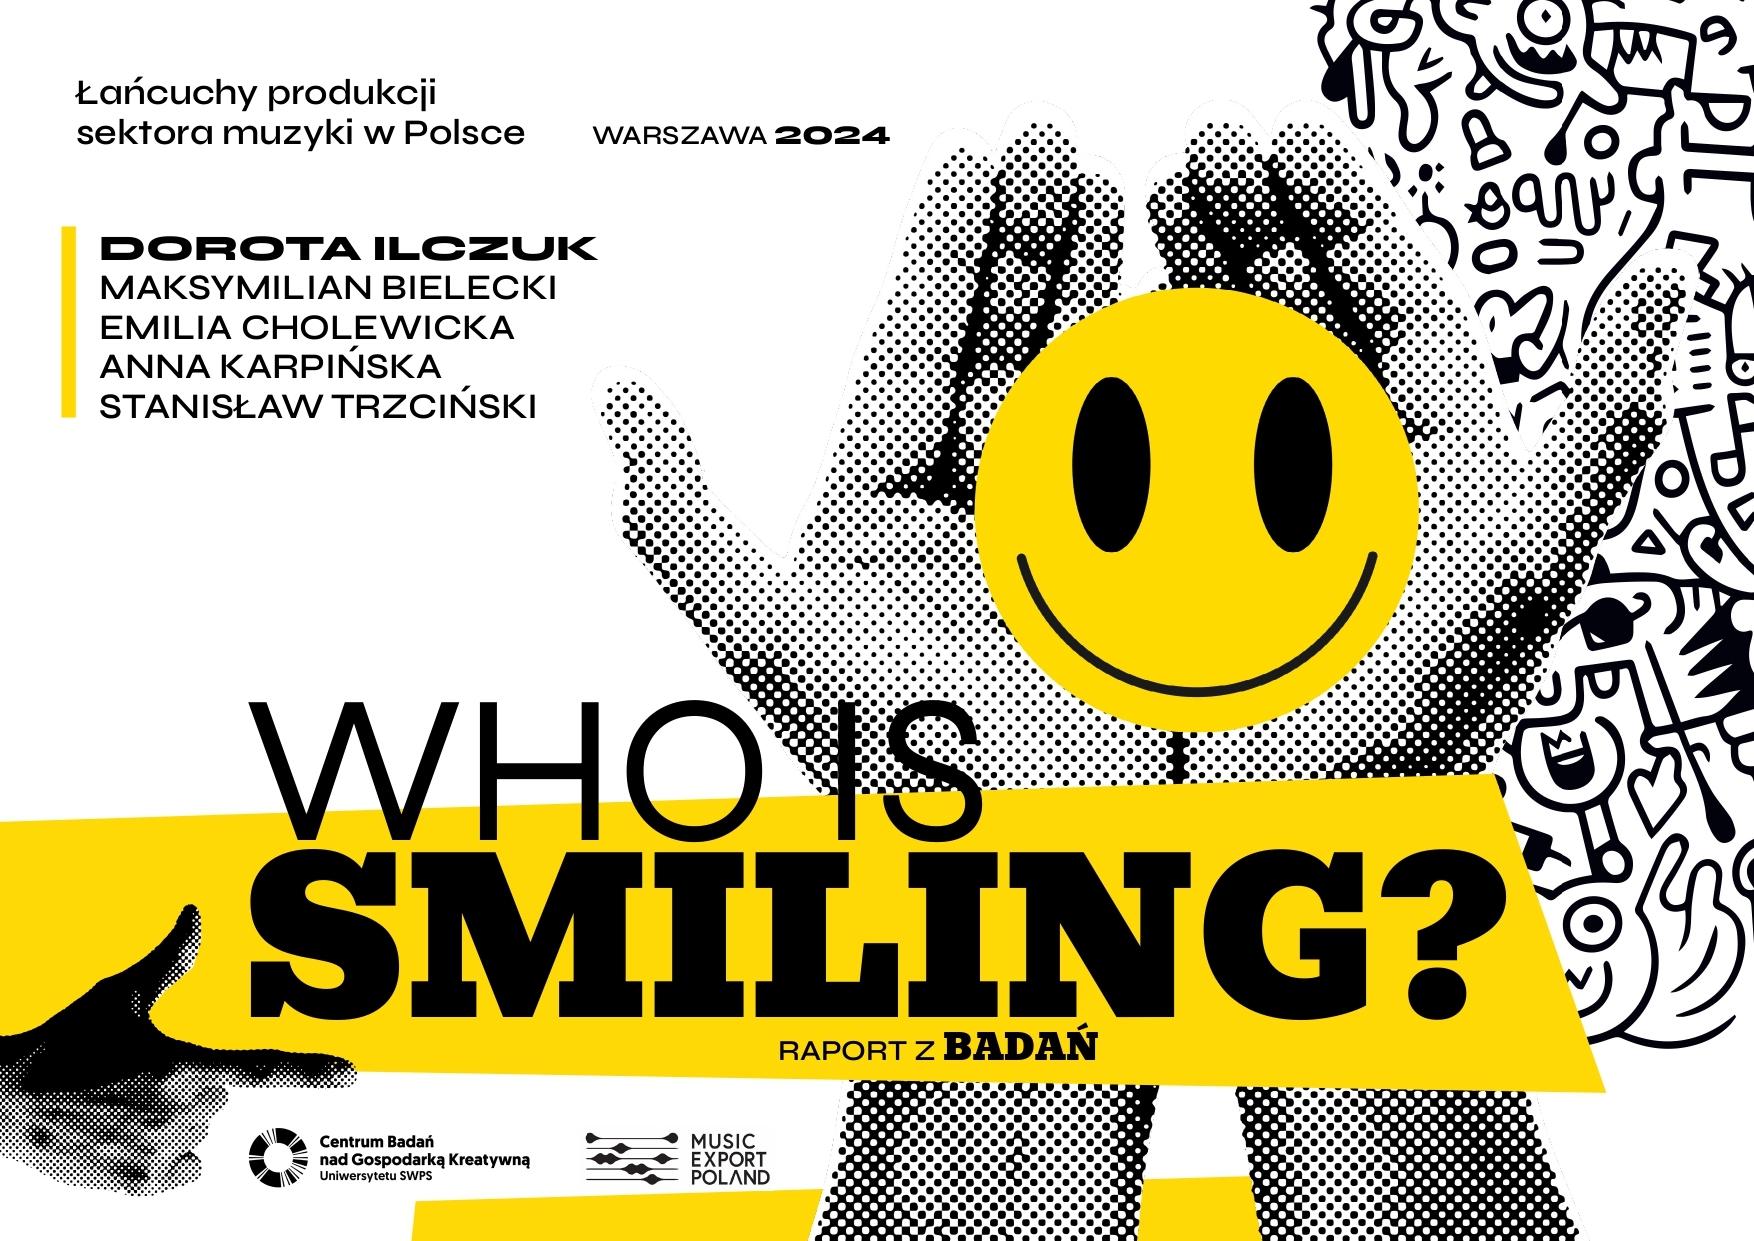 Okładka raportu Whos smiling